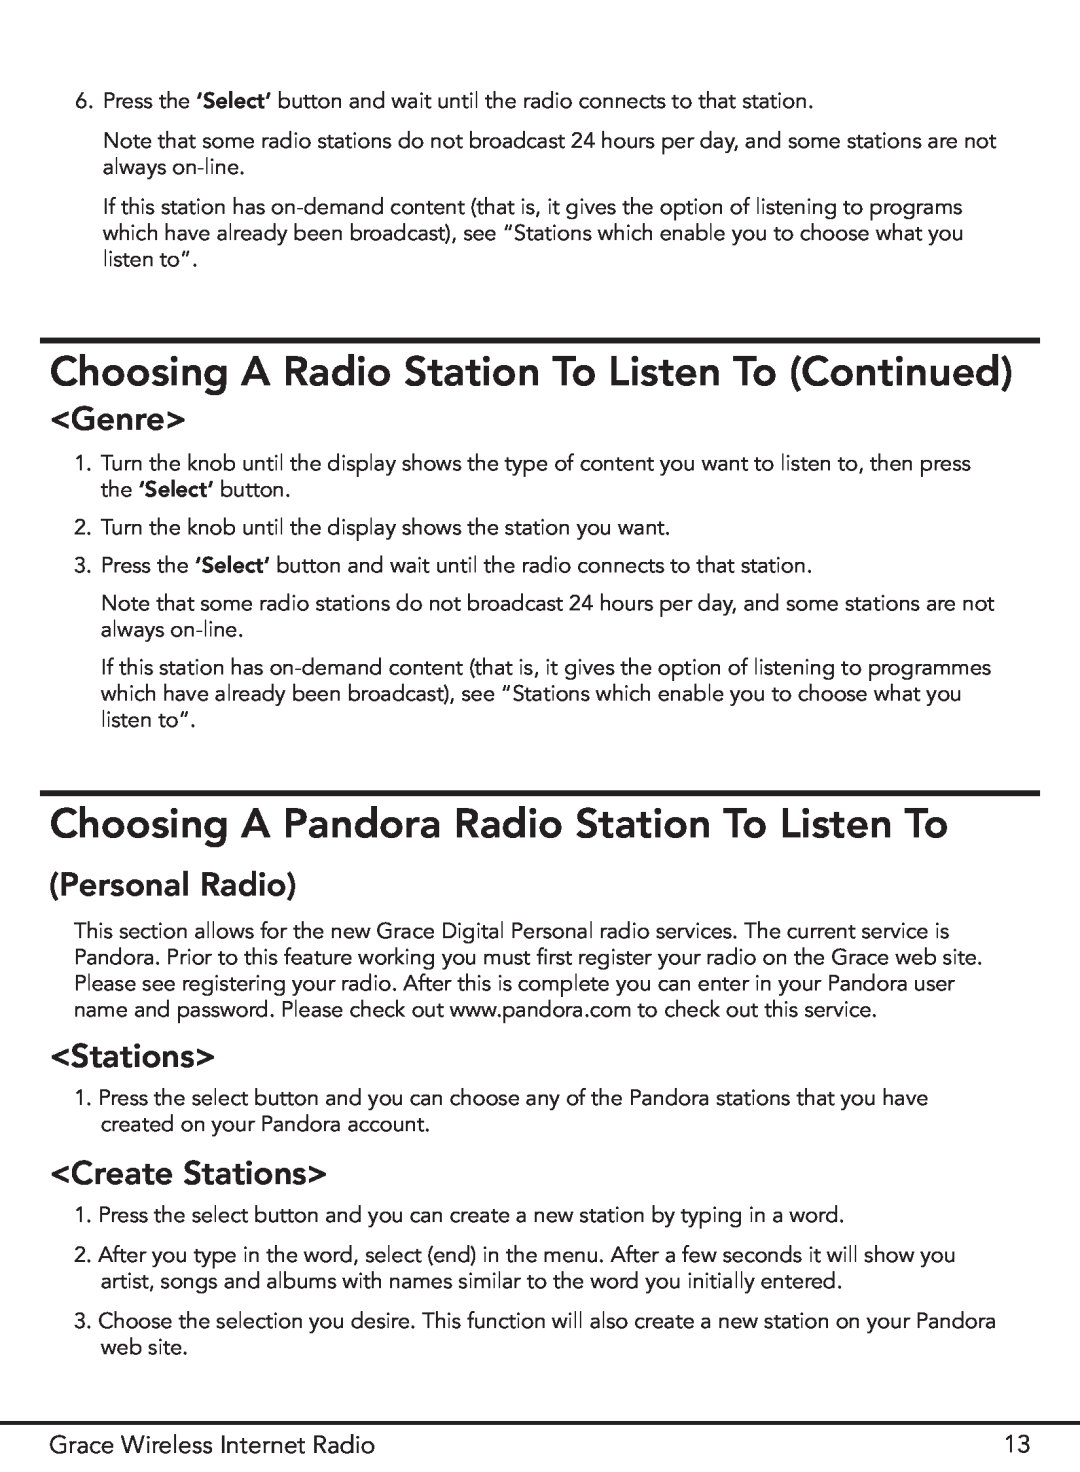 Grace GDI-IR2000 Choosing A Radio Station To Listen To Continued, Choosing A Pandora Radio Station To Listen To, Genre 